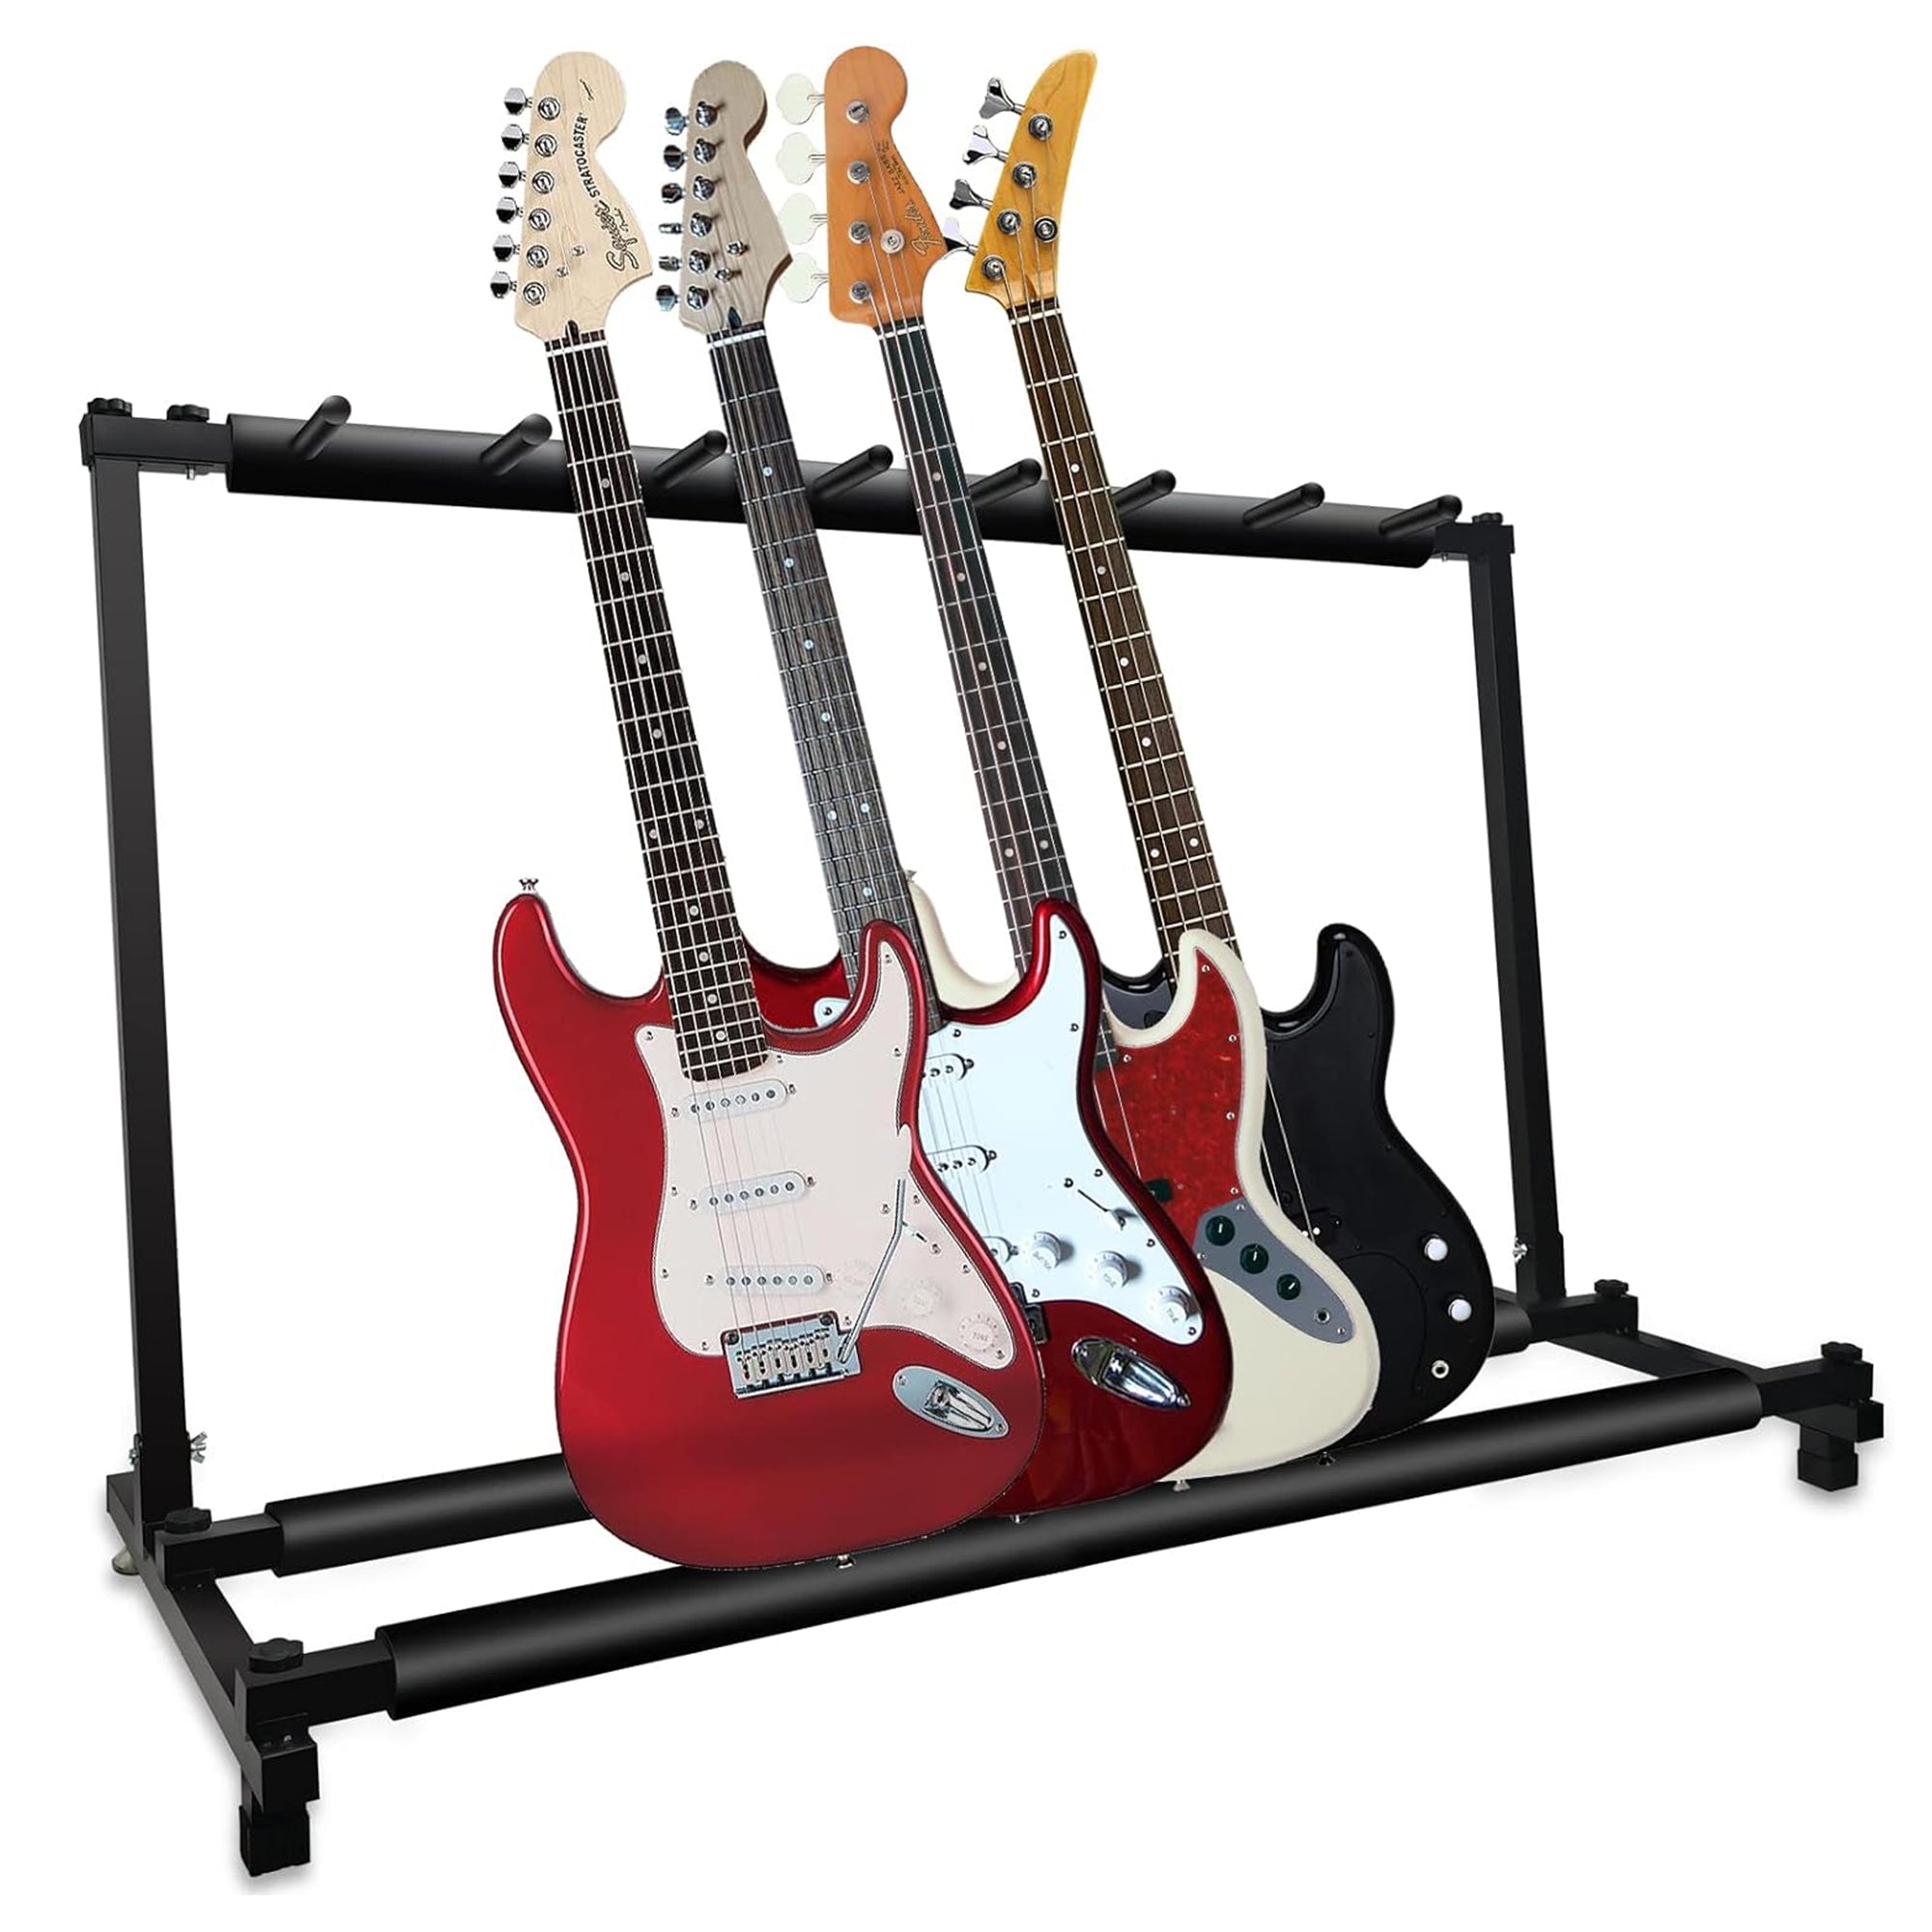 5 Core Guitar Stand Metal Guitar Floor Rack For Multiple Guitars 7 Guitar Stand Folding Design